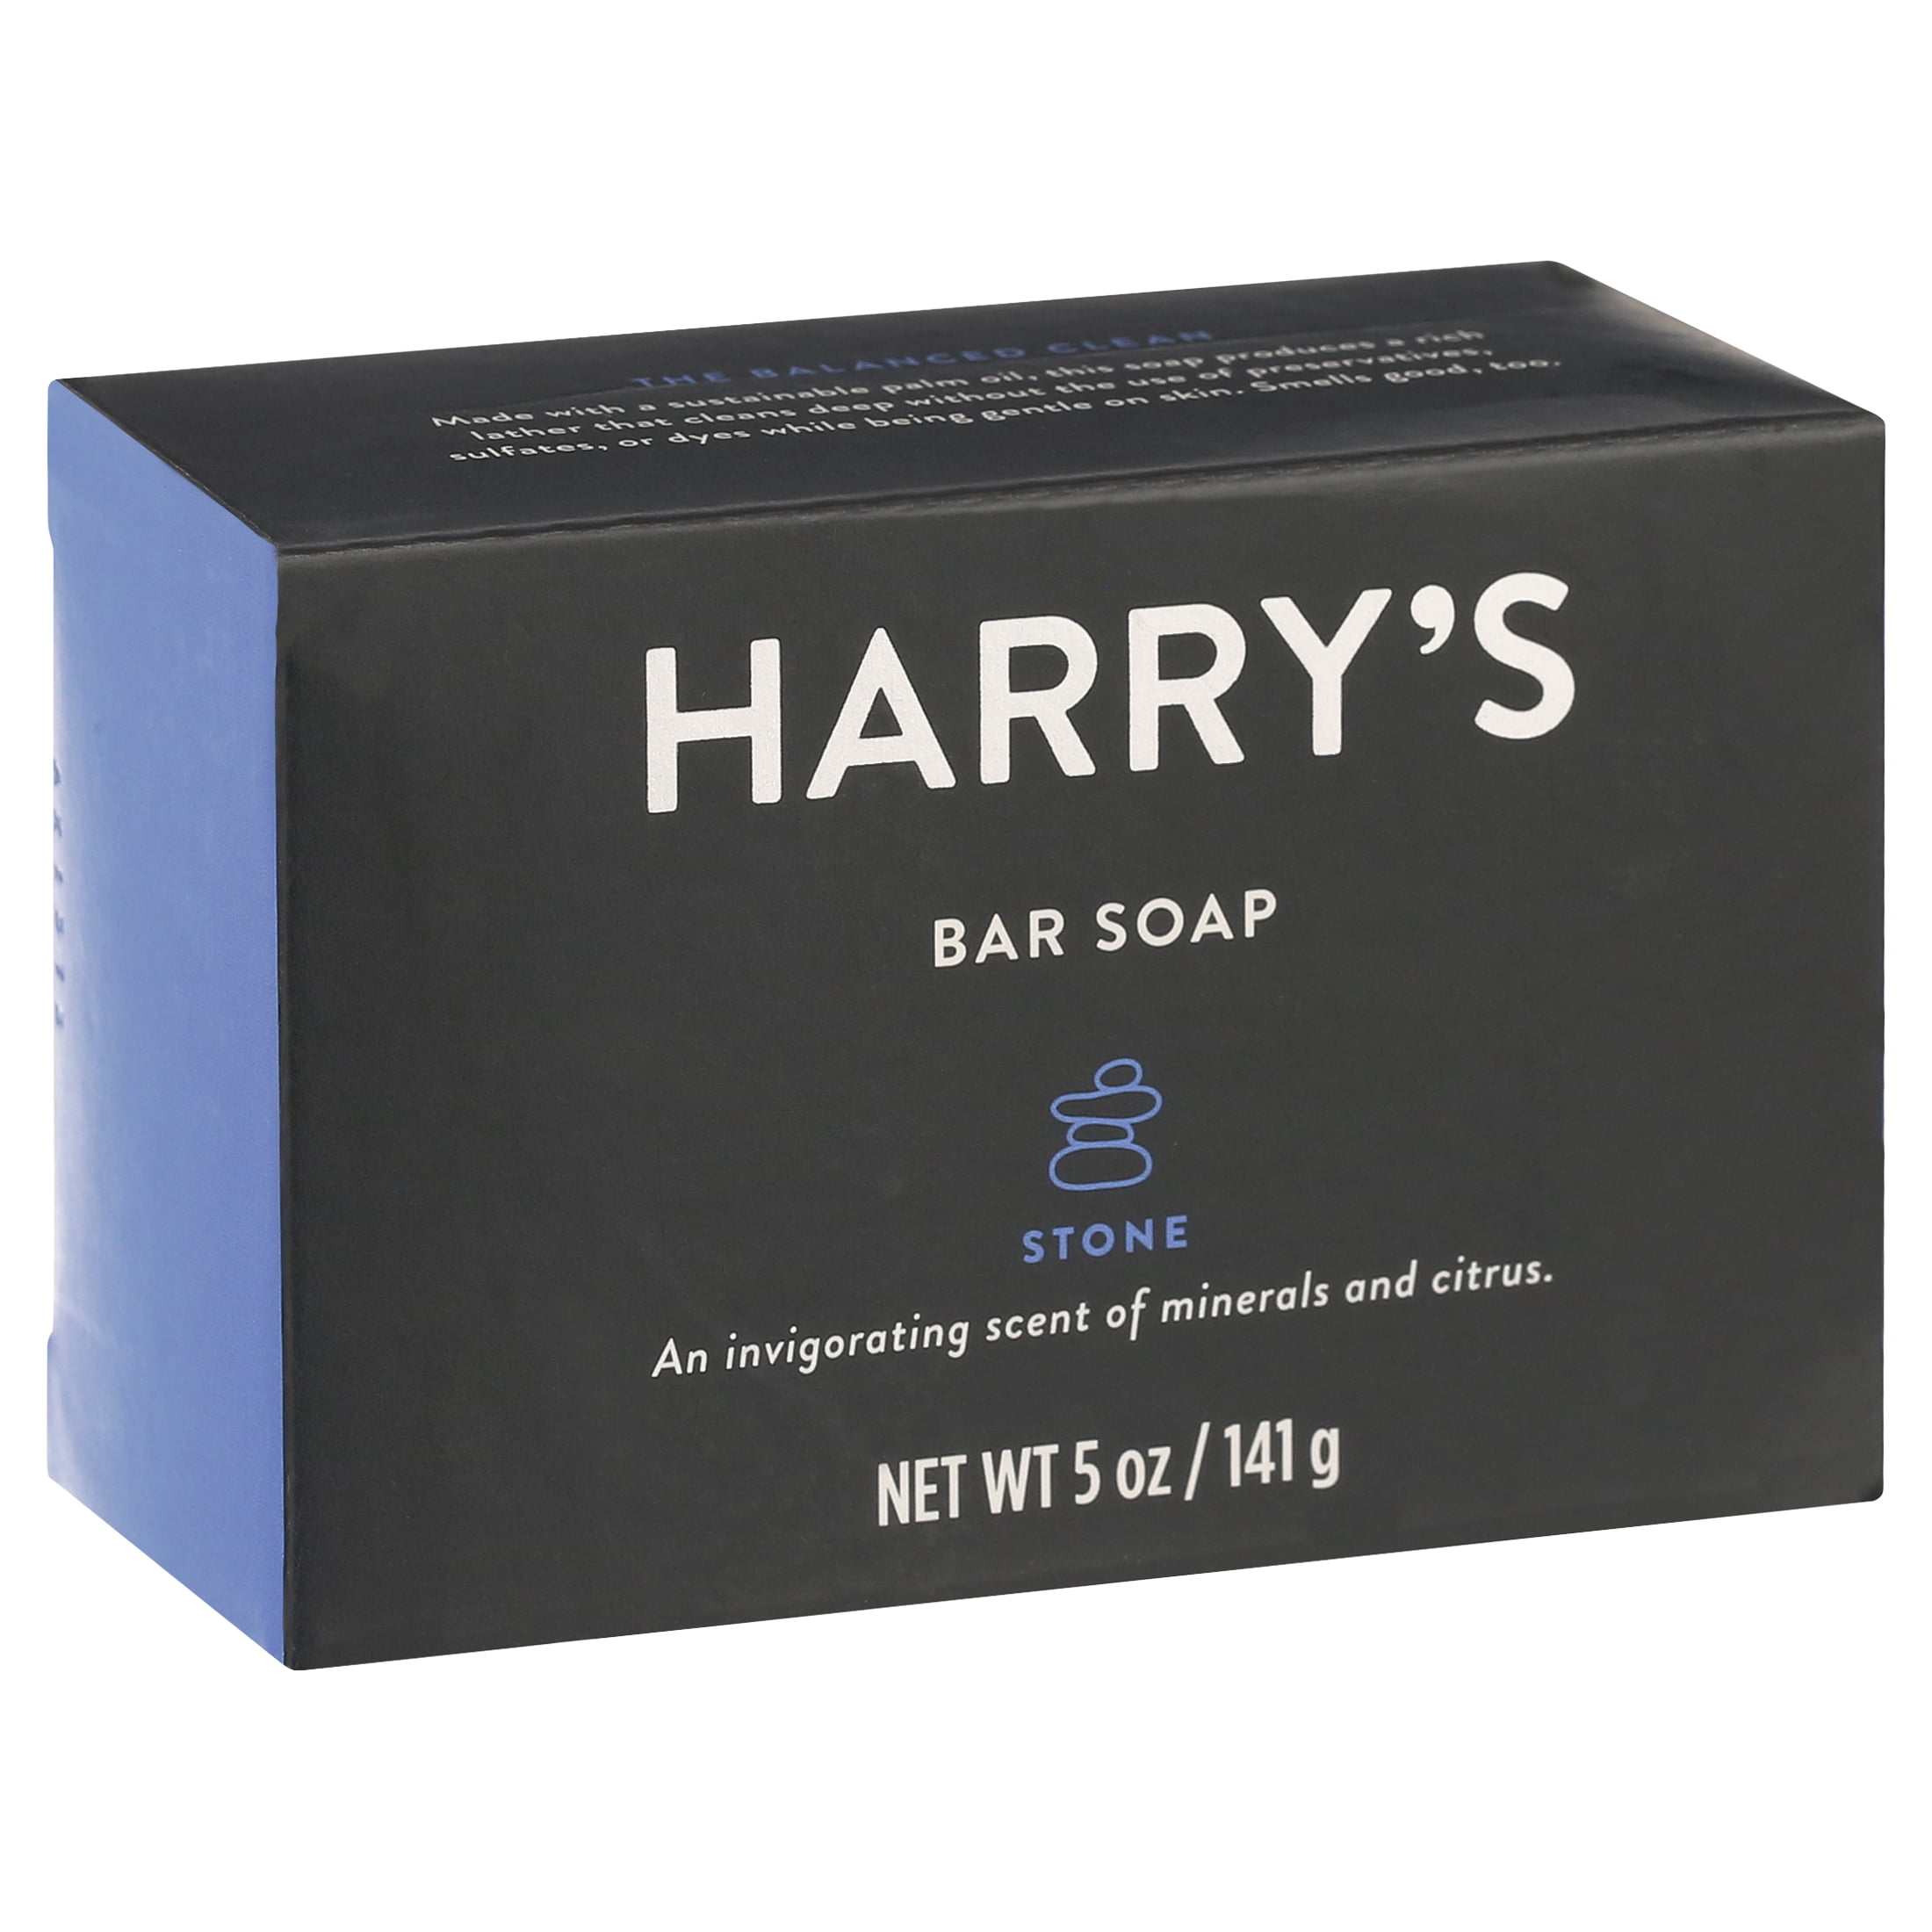 Harry's - Shiso, Stone, Fig, Redwood Bar Soap 4 oz/113g Each - Set of 4